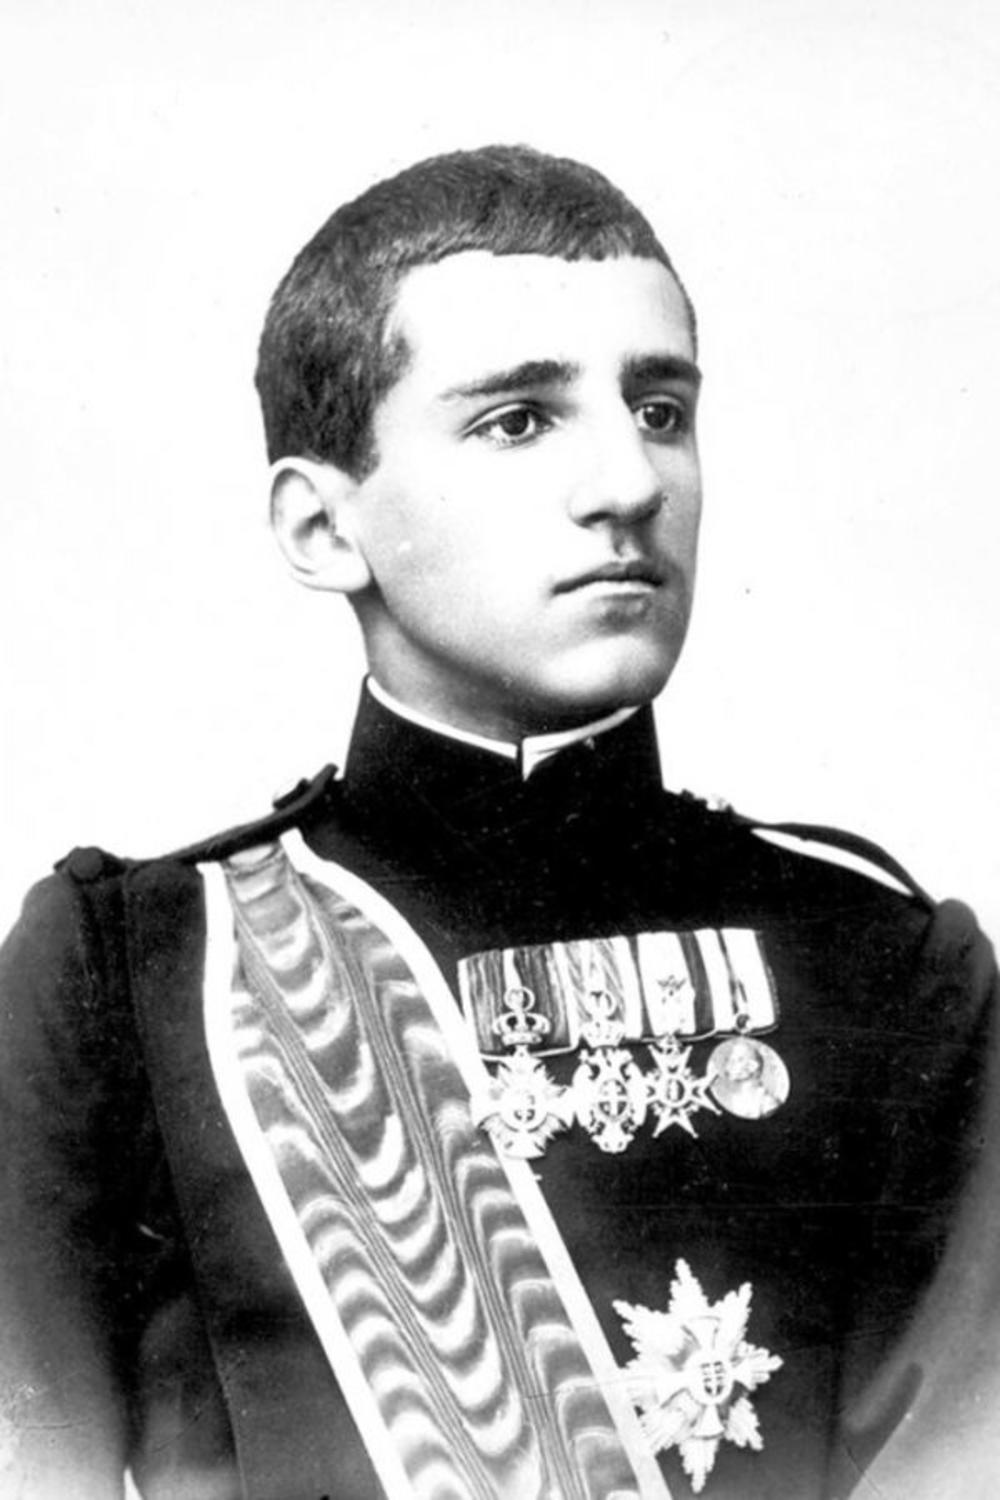 Slika iz mladosti kralja Aleksandra Karađorđevića  